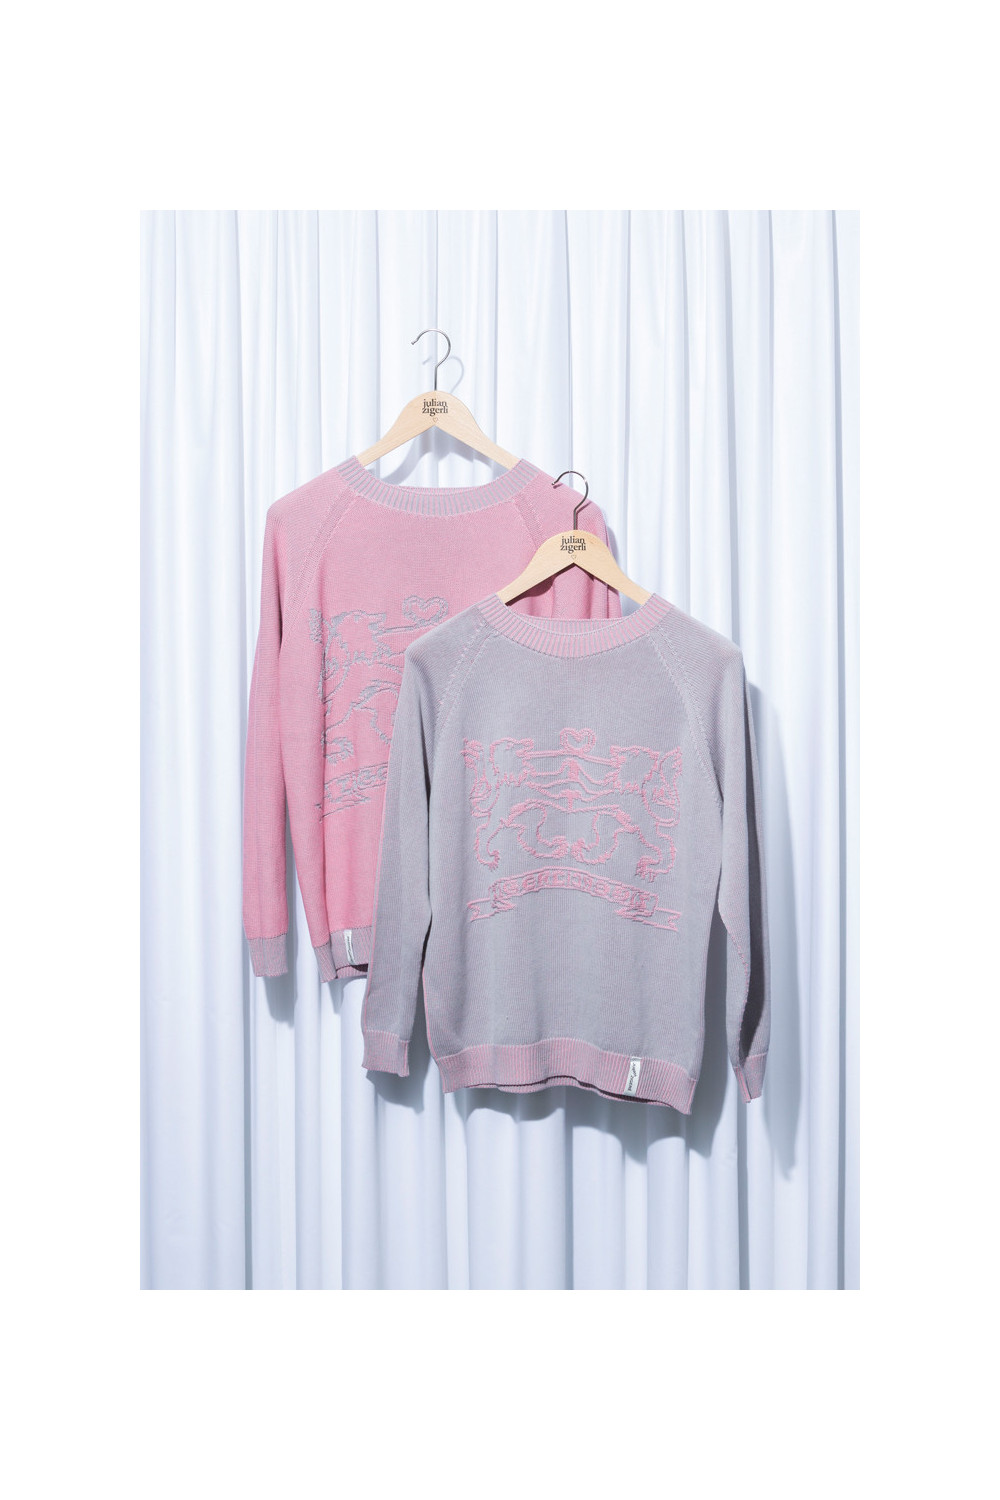 Züri Leu Knit Sweater – Light Grey/Pink